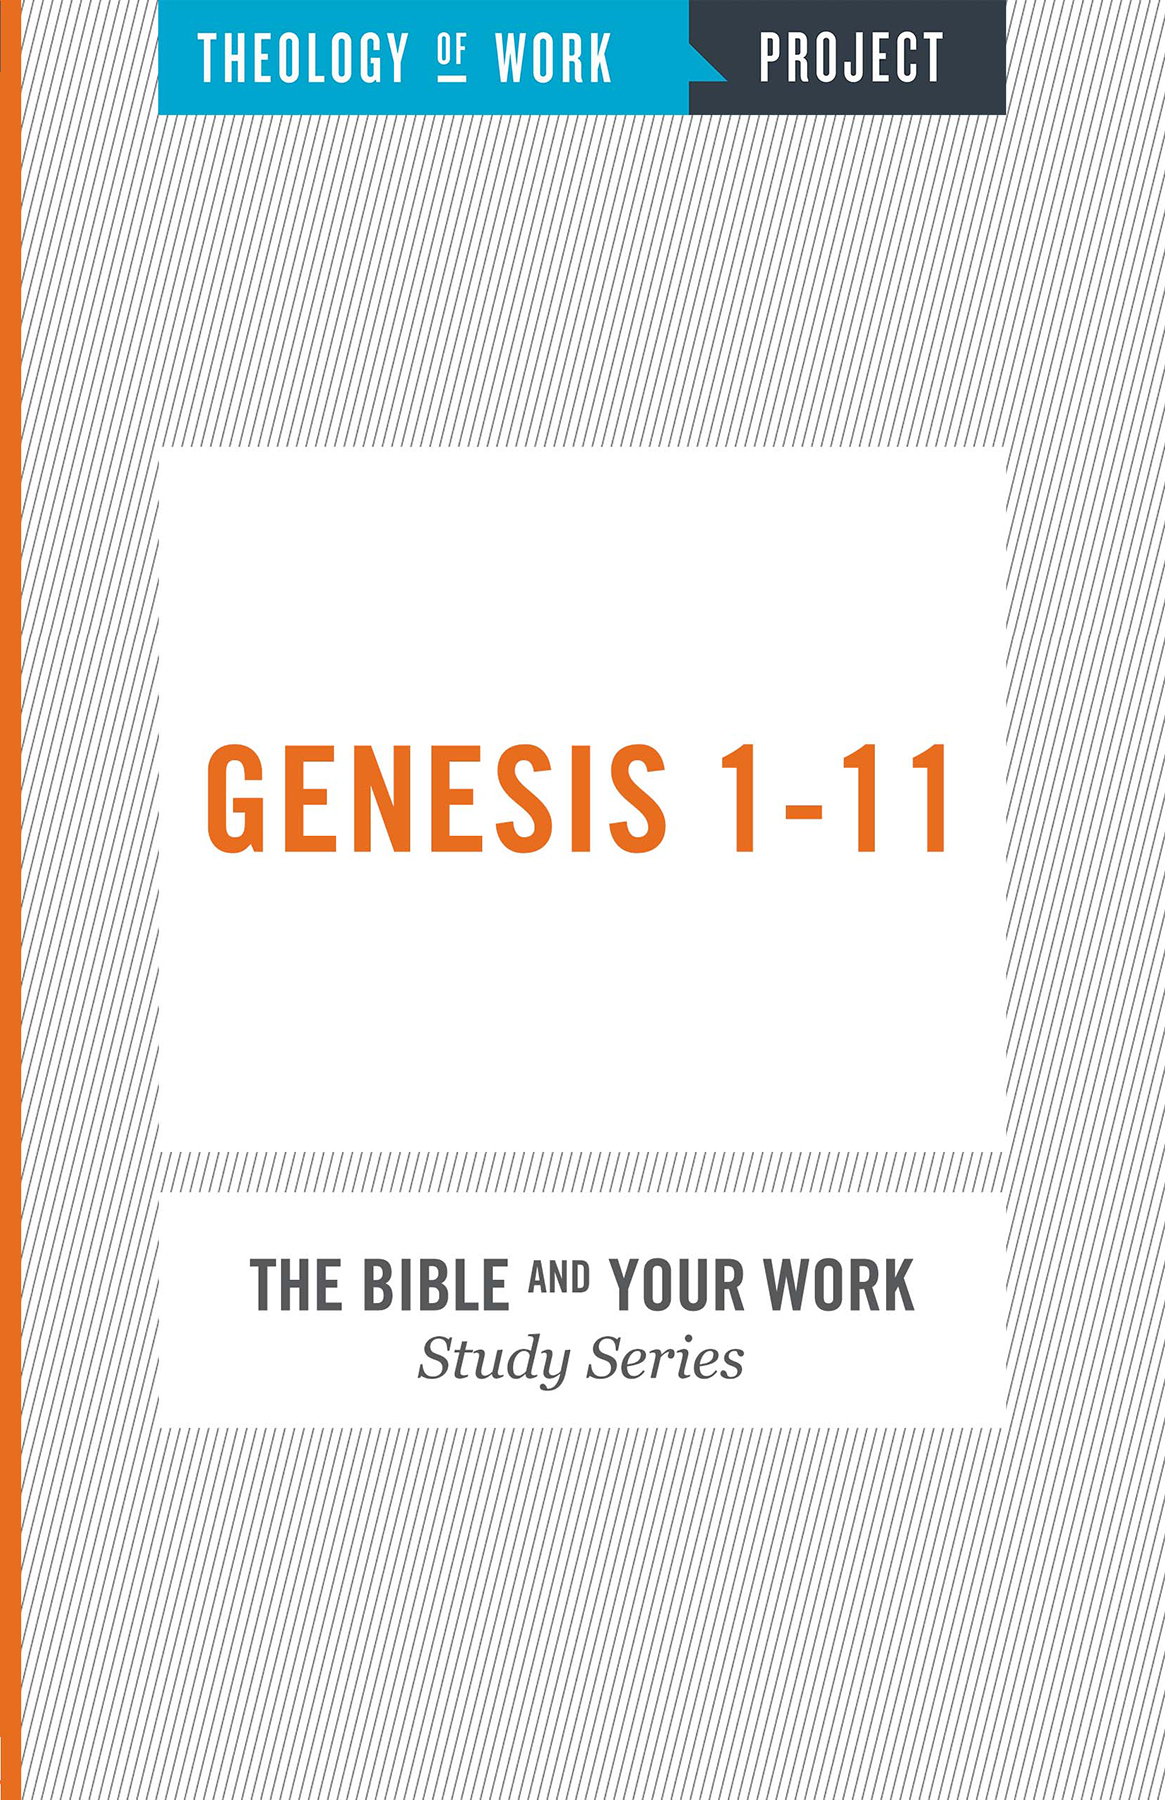 Genesis 1-11 Bible Study Cover